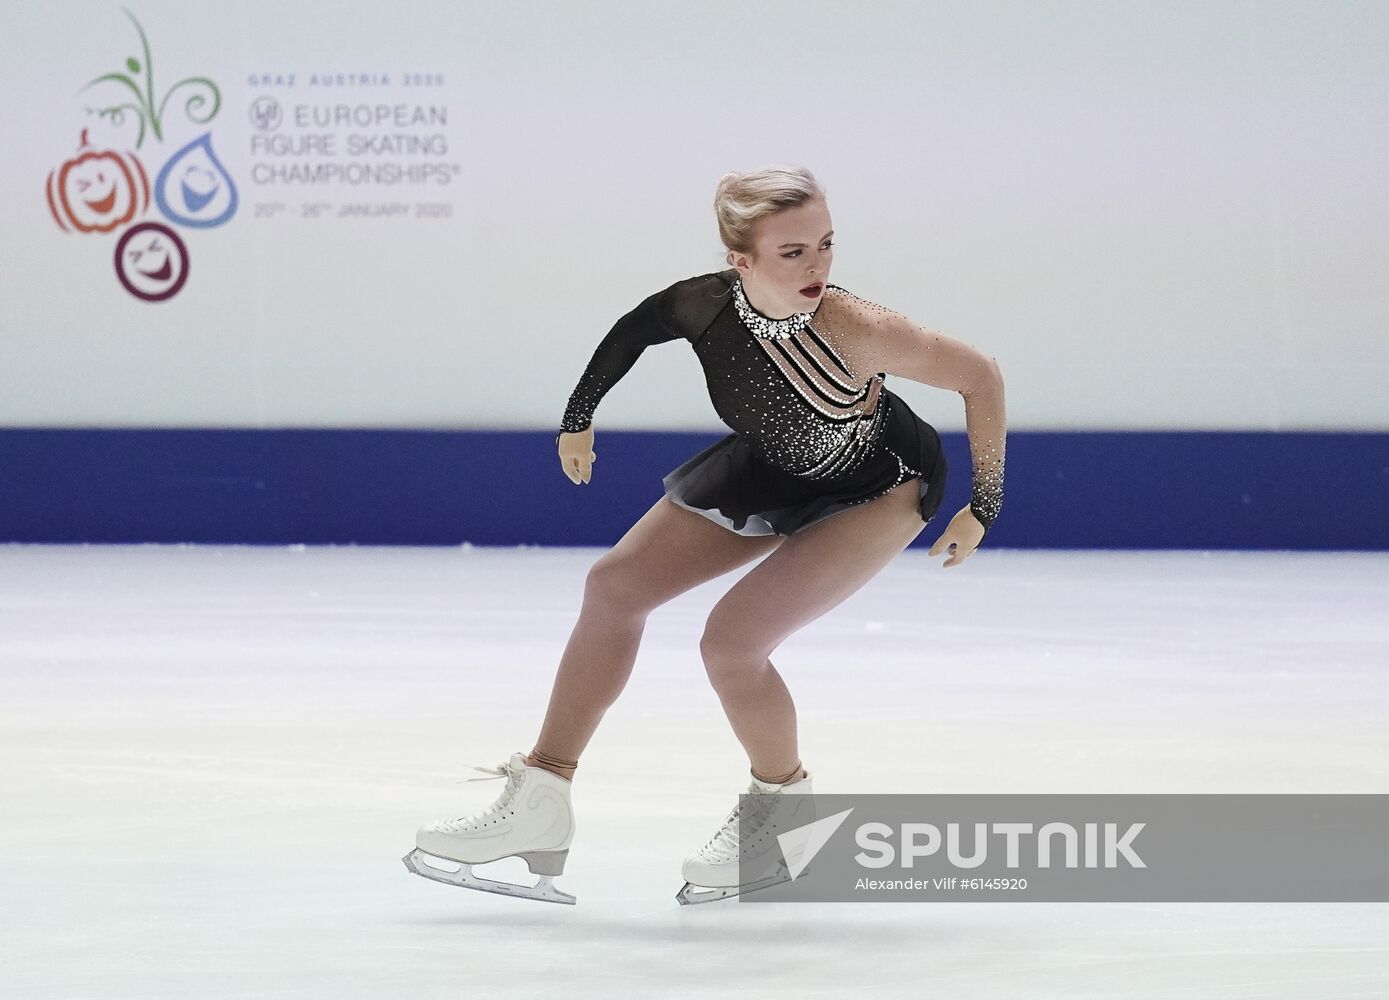 Austria Figure Skating European Championships Ladies Free Skating